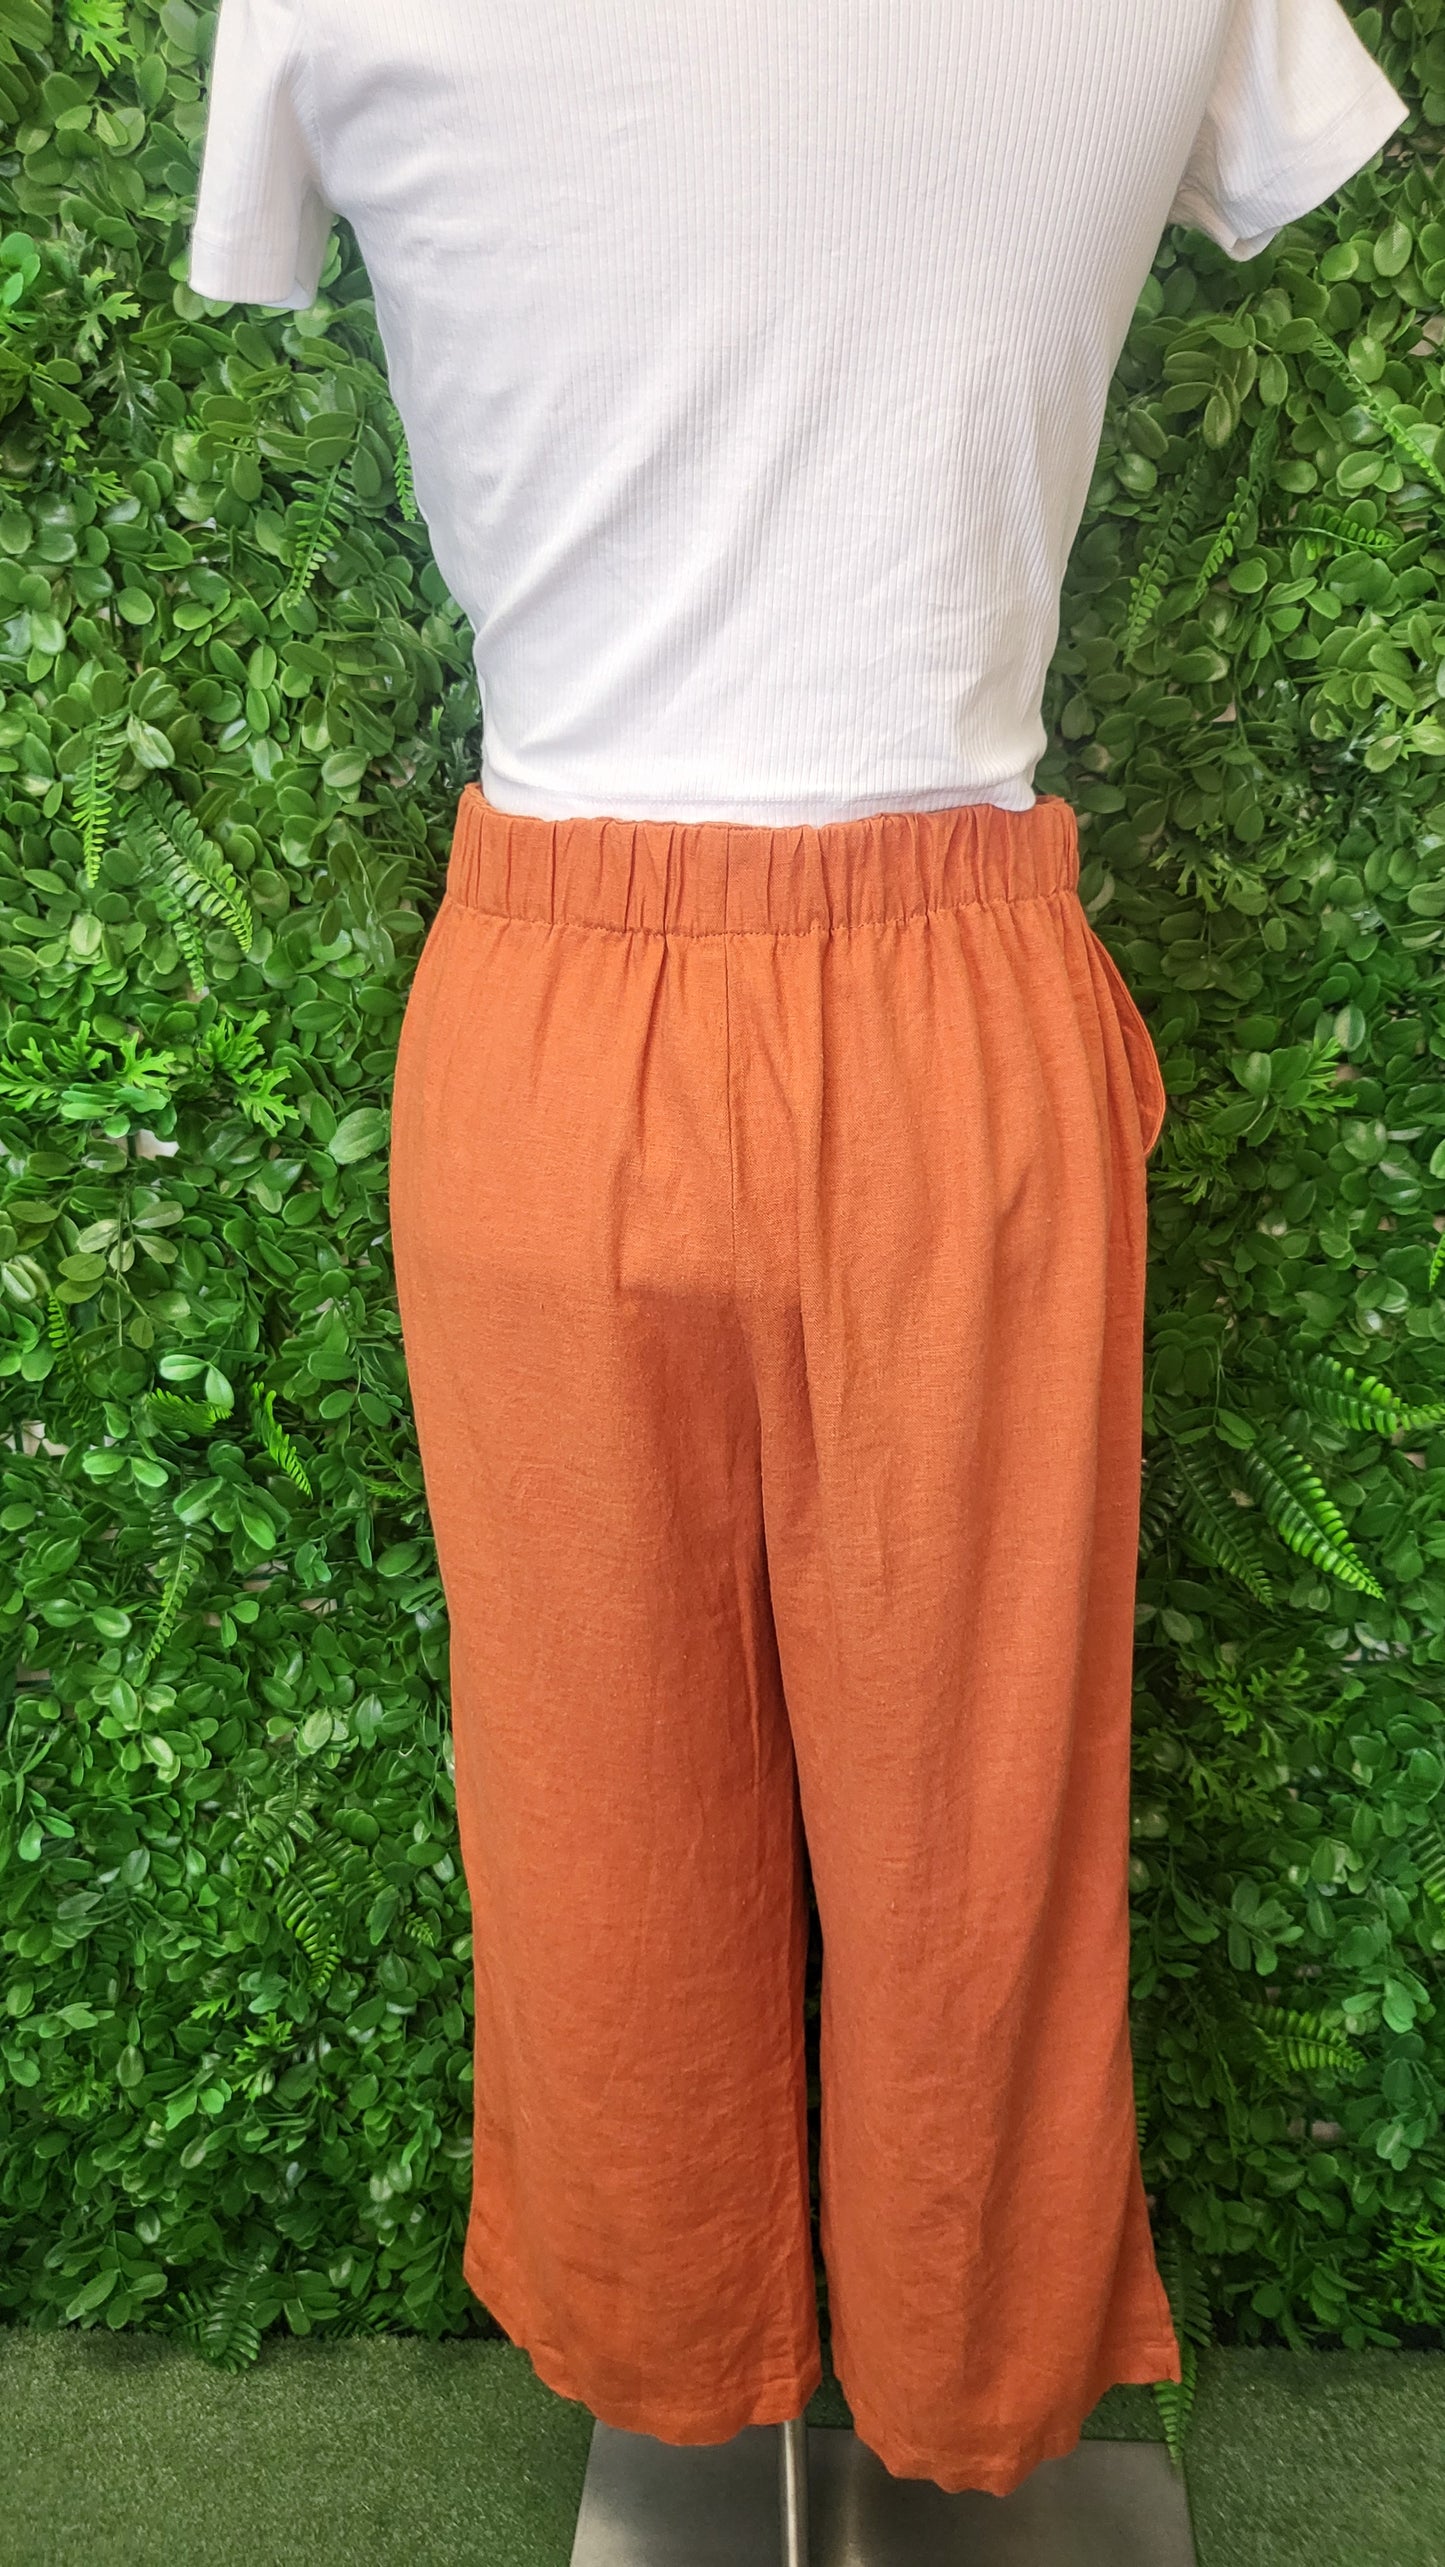 Emerge Burnt Orange Linen Blend Pant (10)